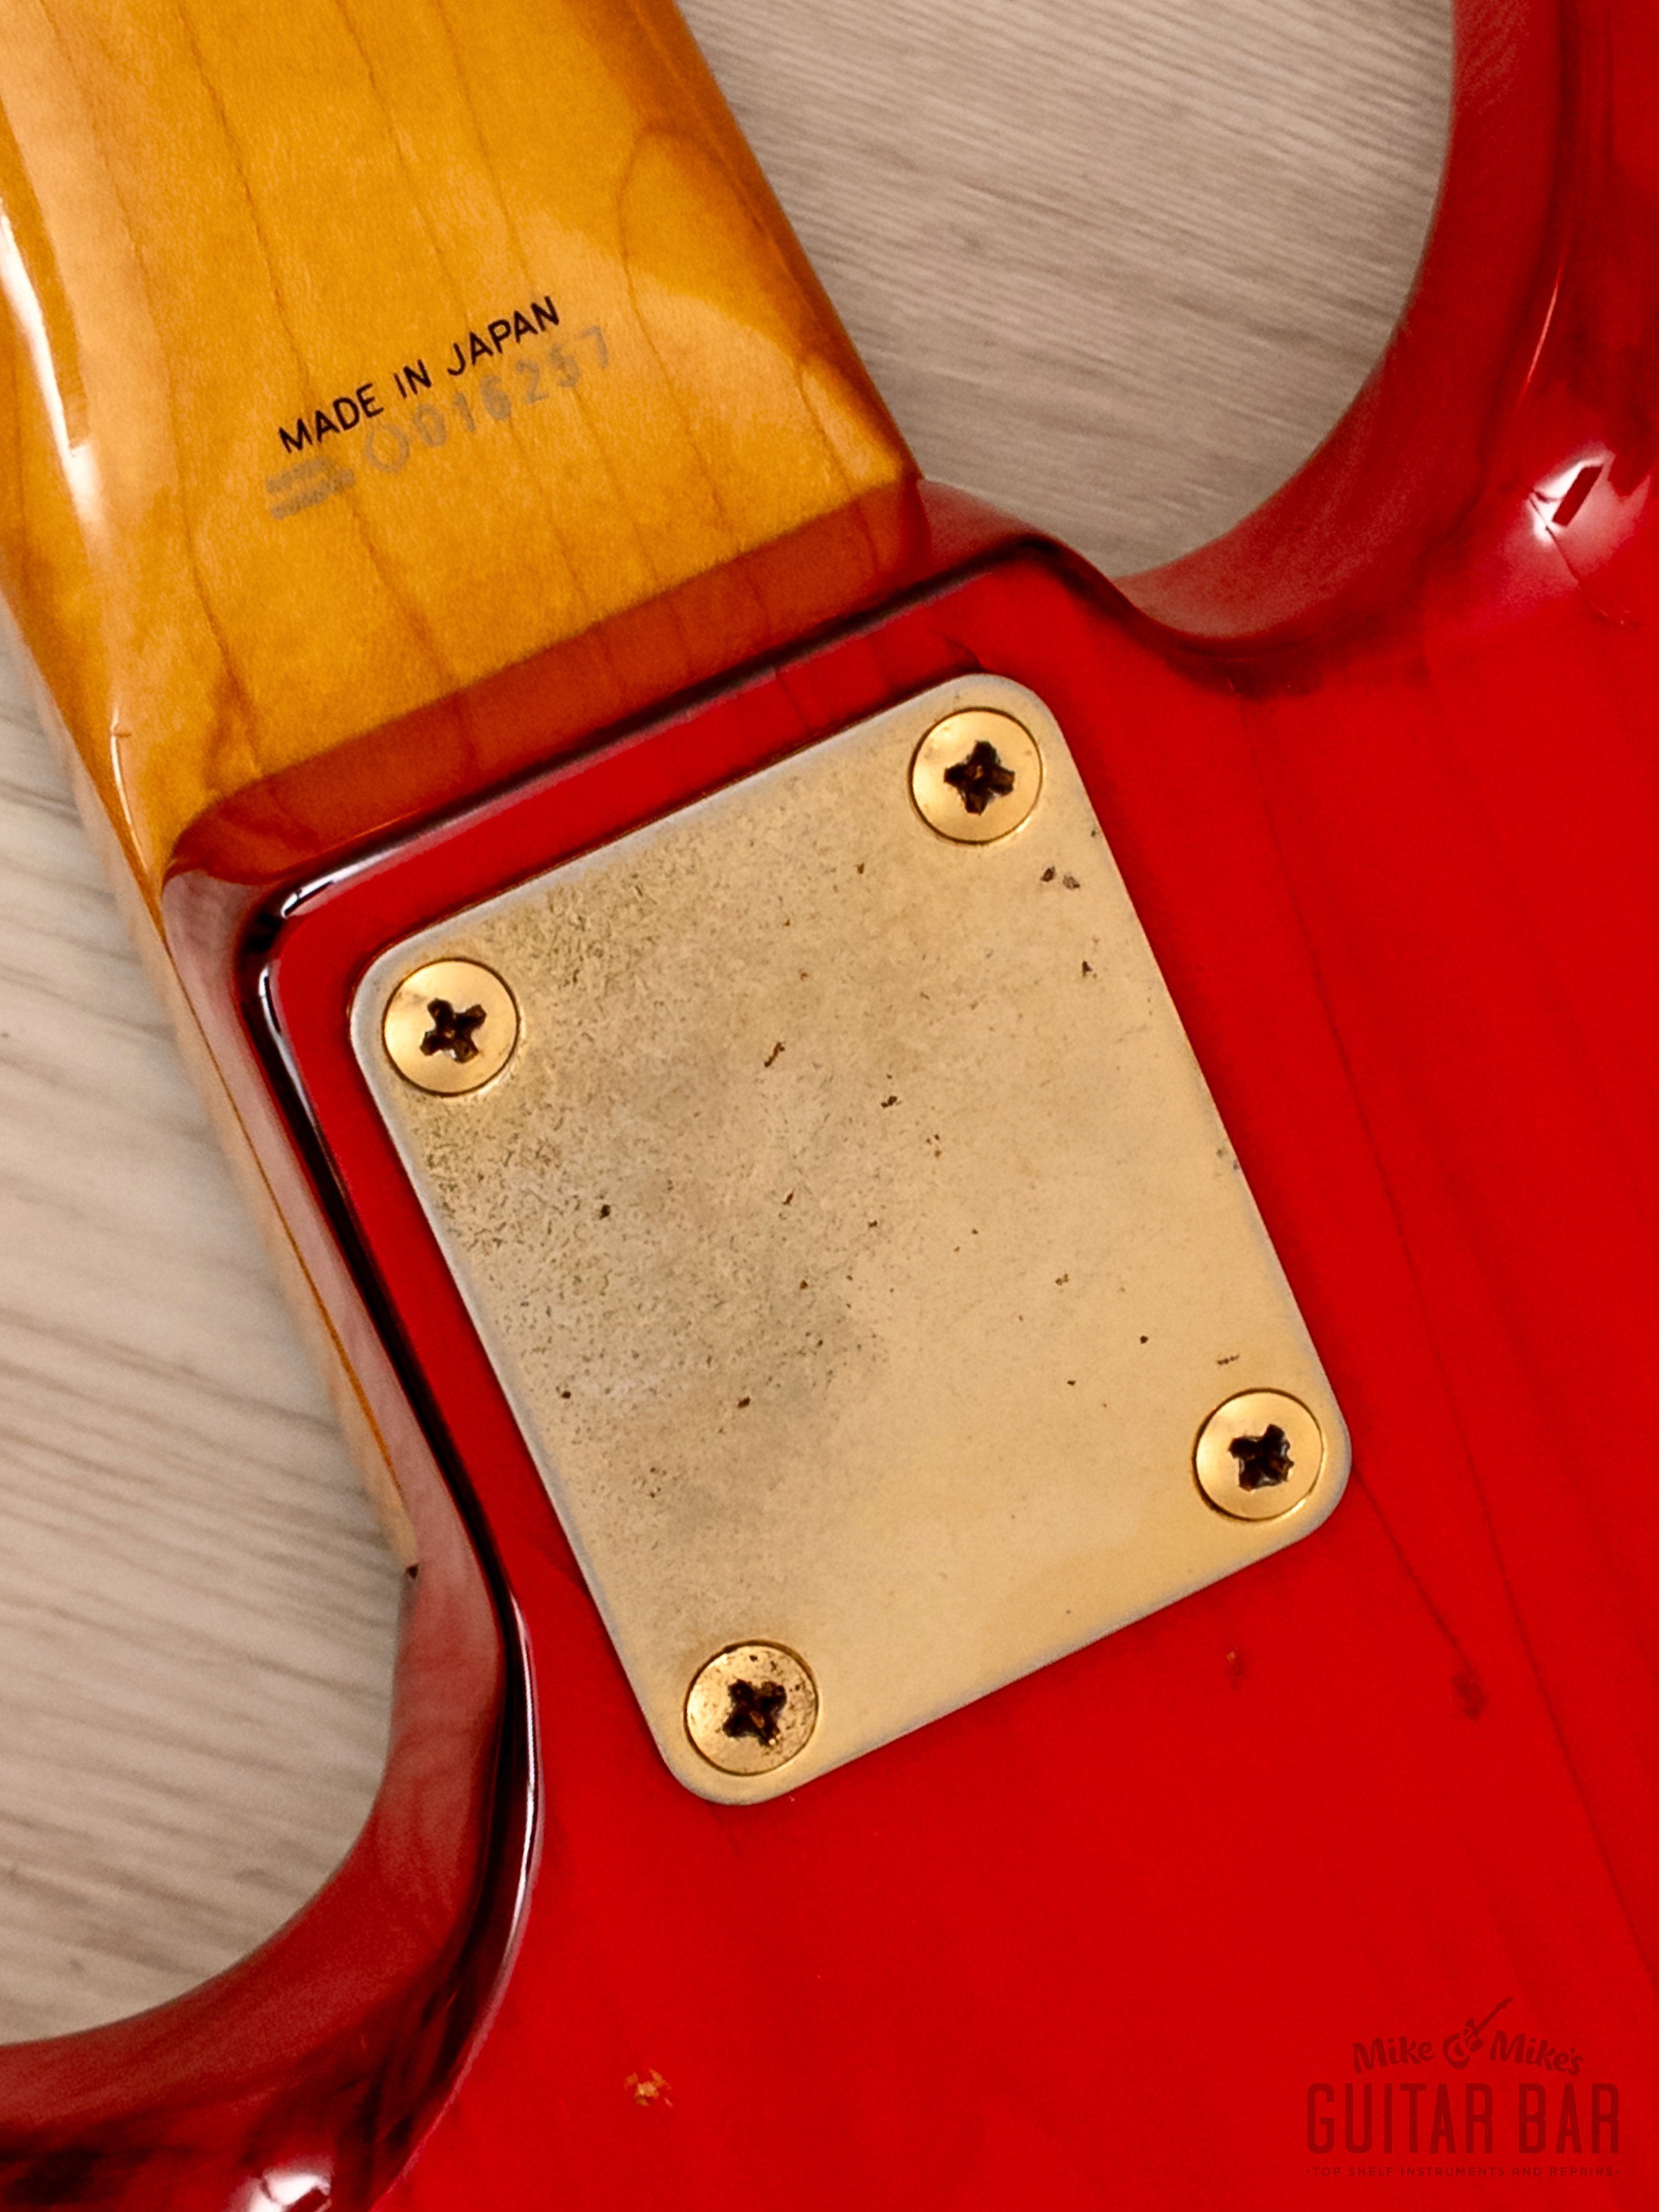 1993 Fender Custom Edition Jazz Bass JB62G-70 Clear Charcoal Red w/ Gold Hardware, Japan MIJ